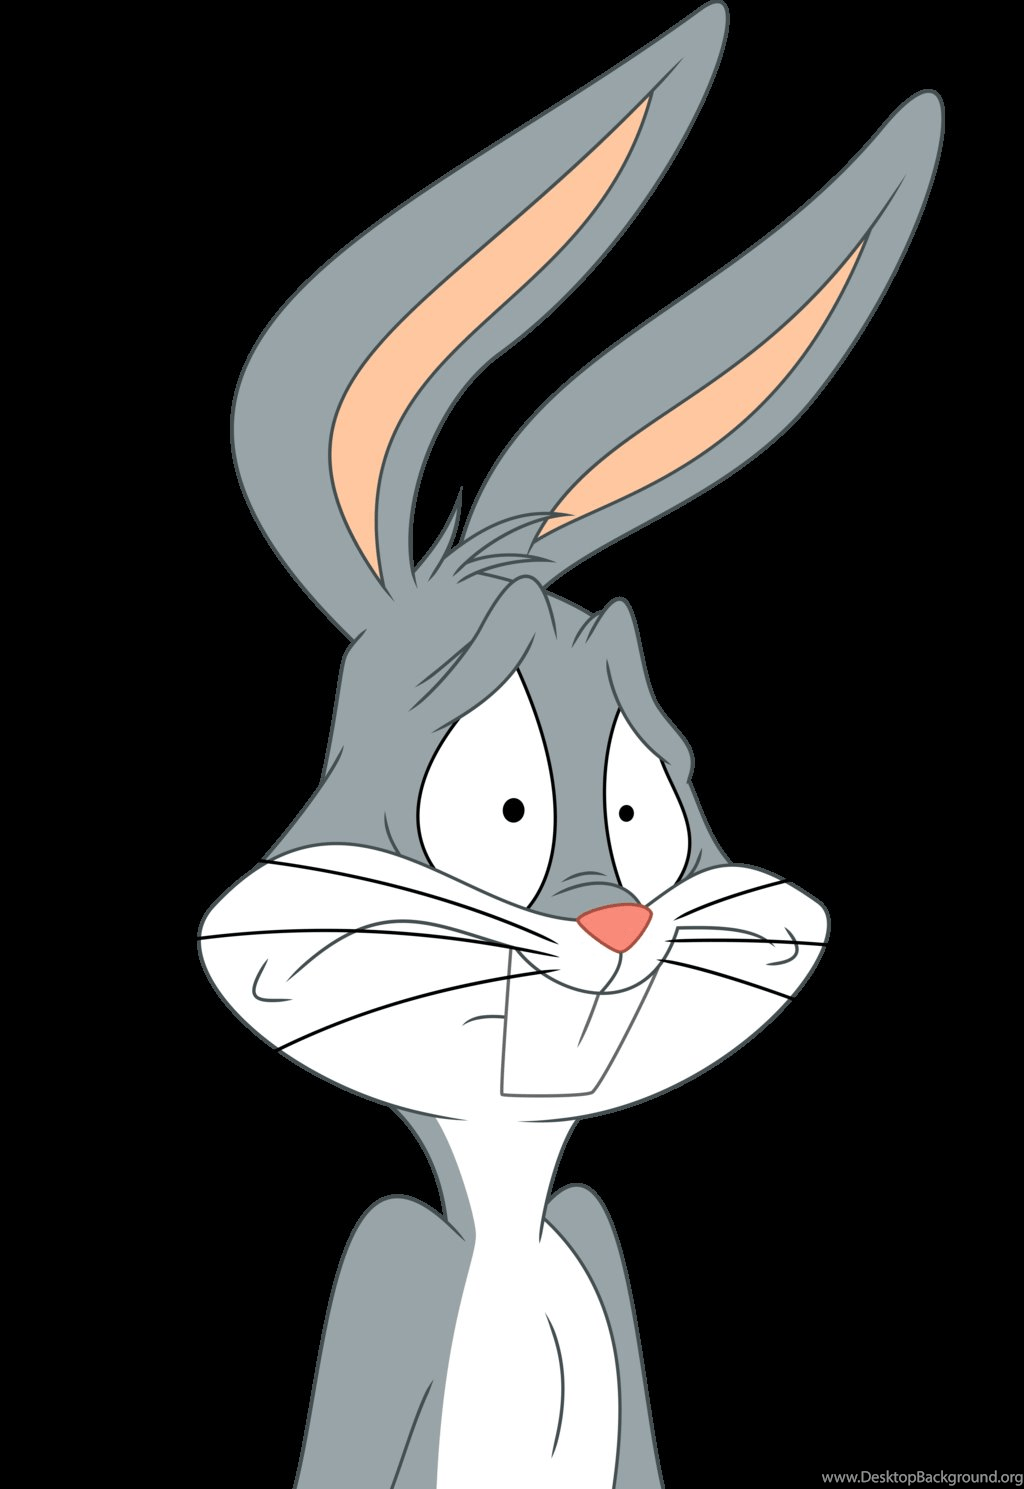 Bugs Bunny - บัก บัน นี่ วอลเปเปอร์ - HD Wallpaper 